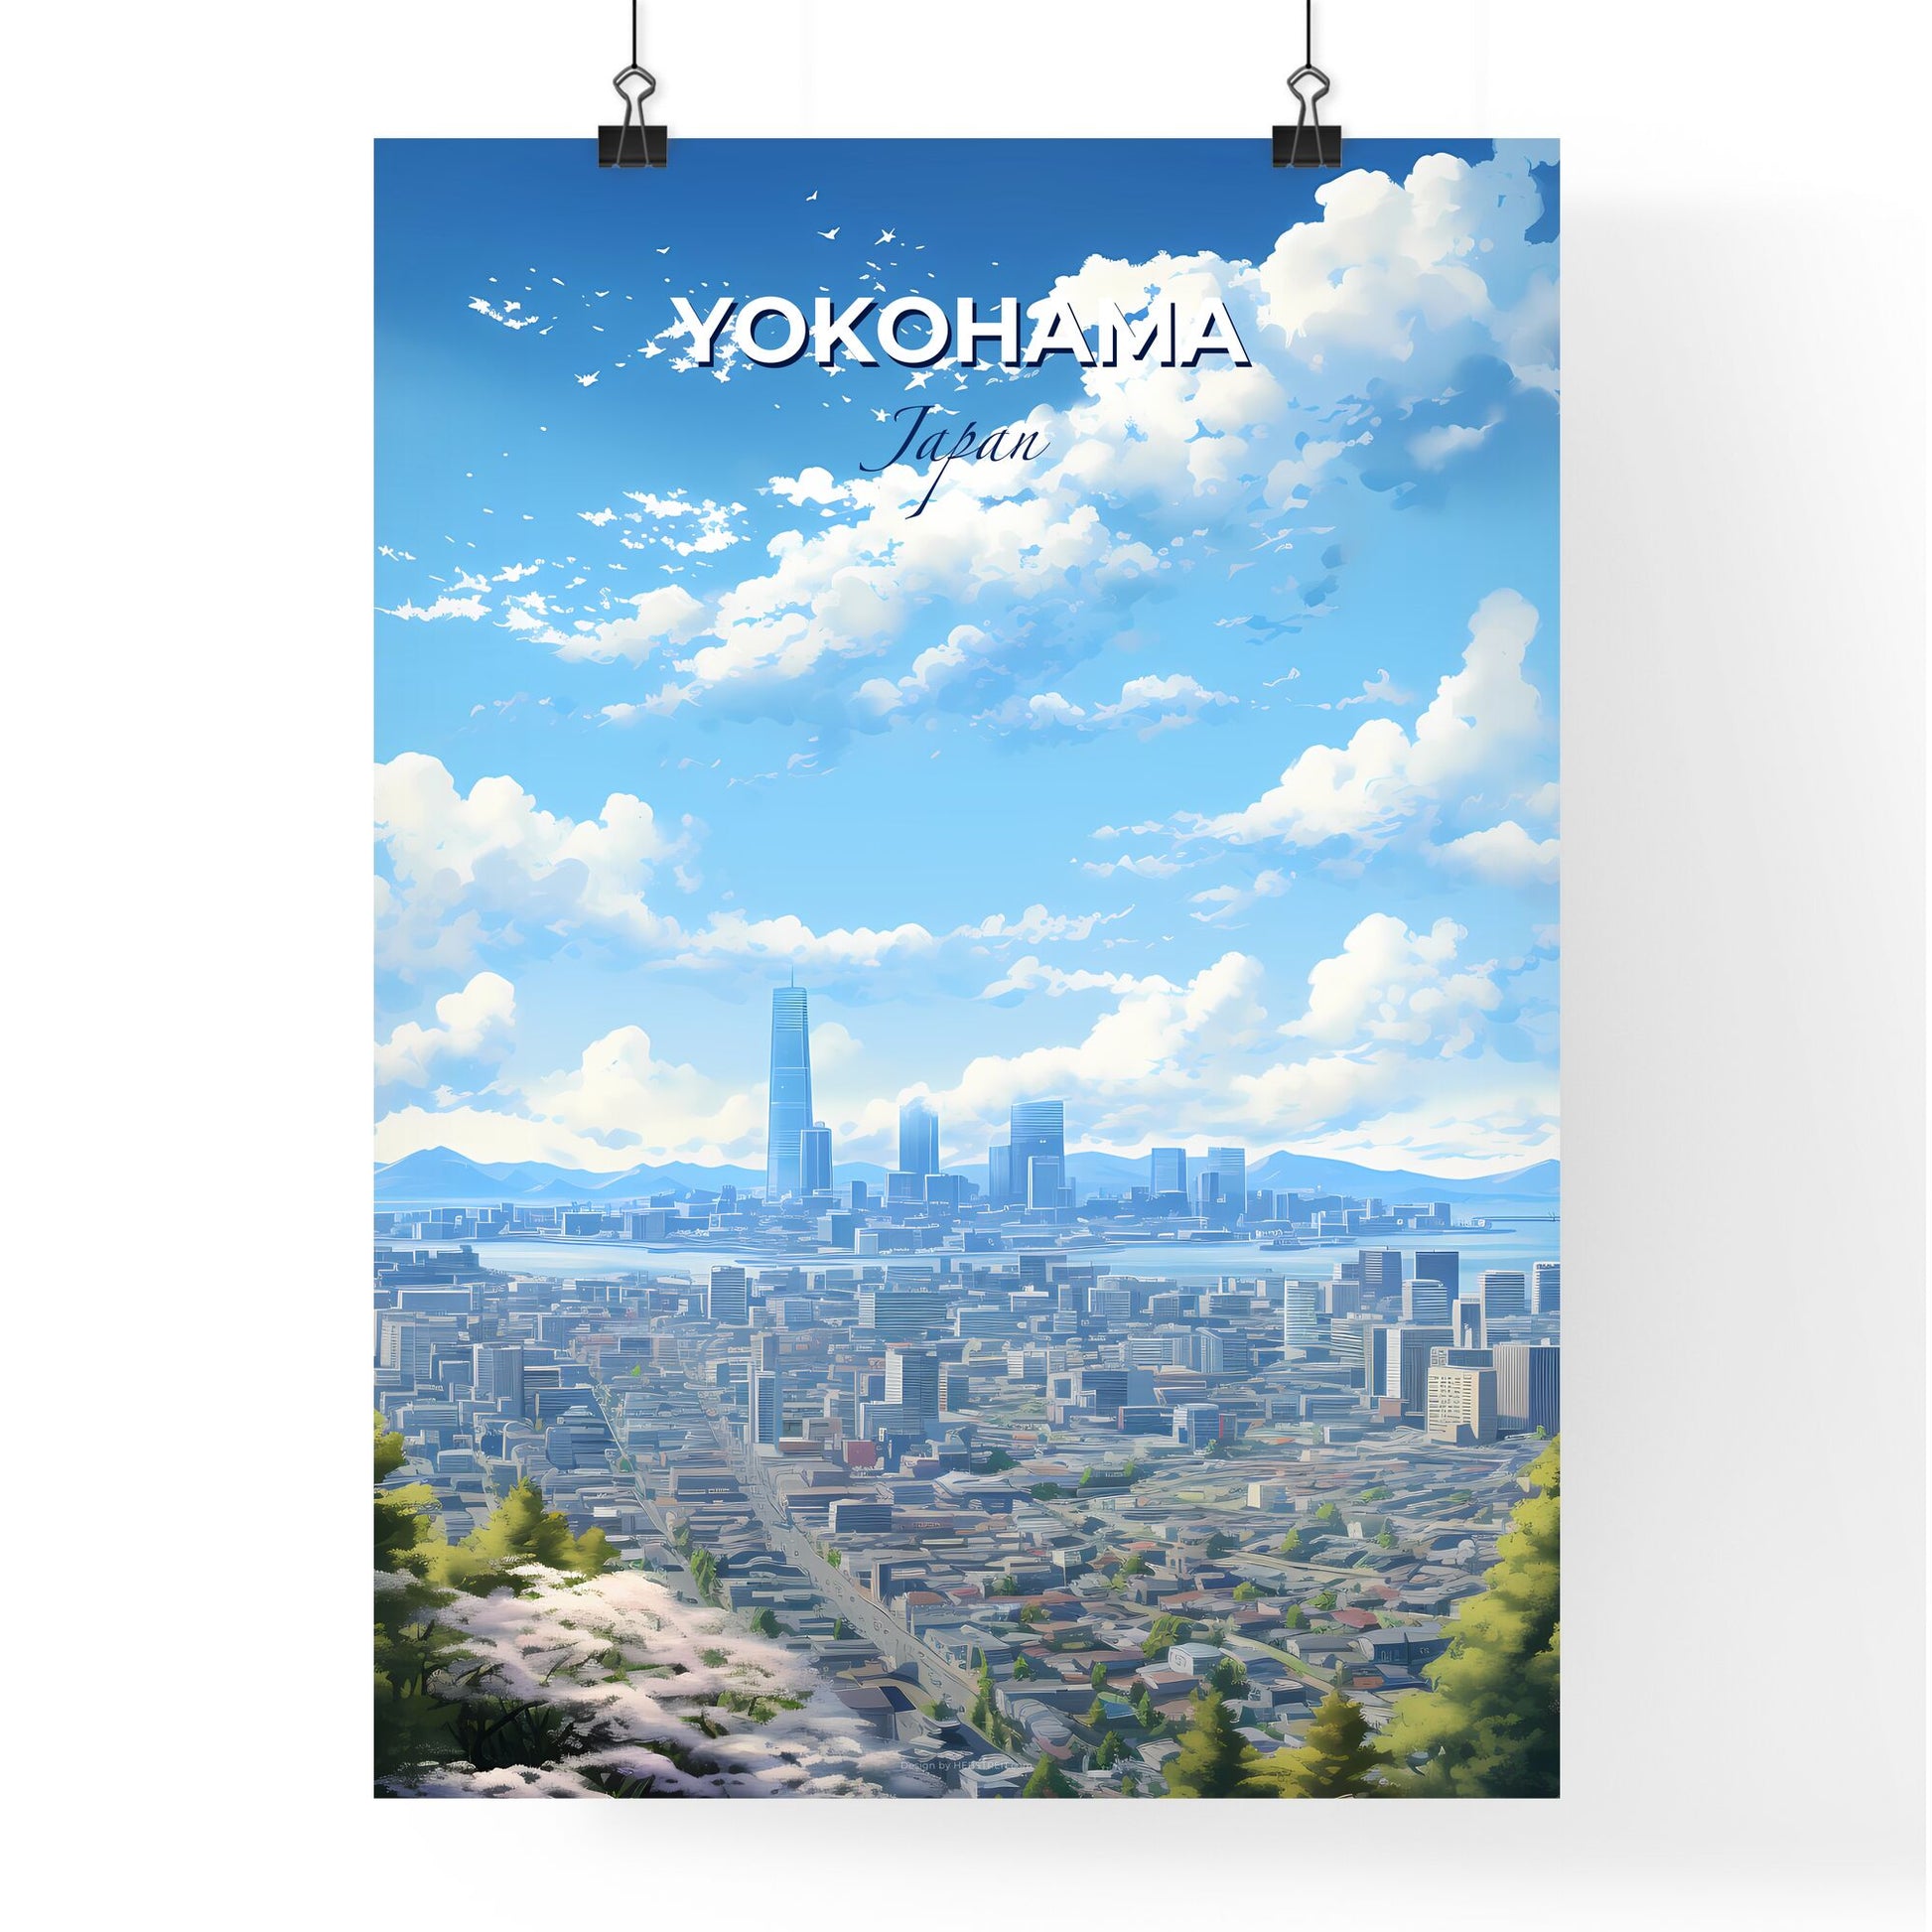 Yokohama Japan Skyline - A Cityscape With Trees And Blue Sky - Customizable Travel Gift Default Title